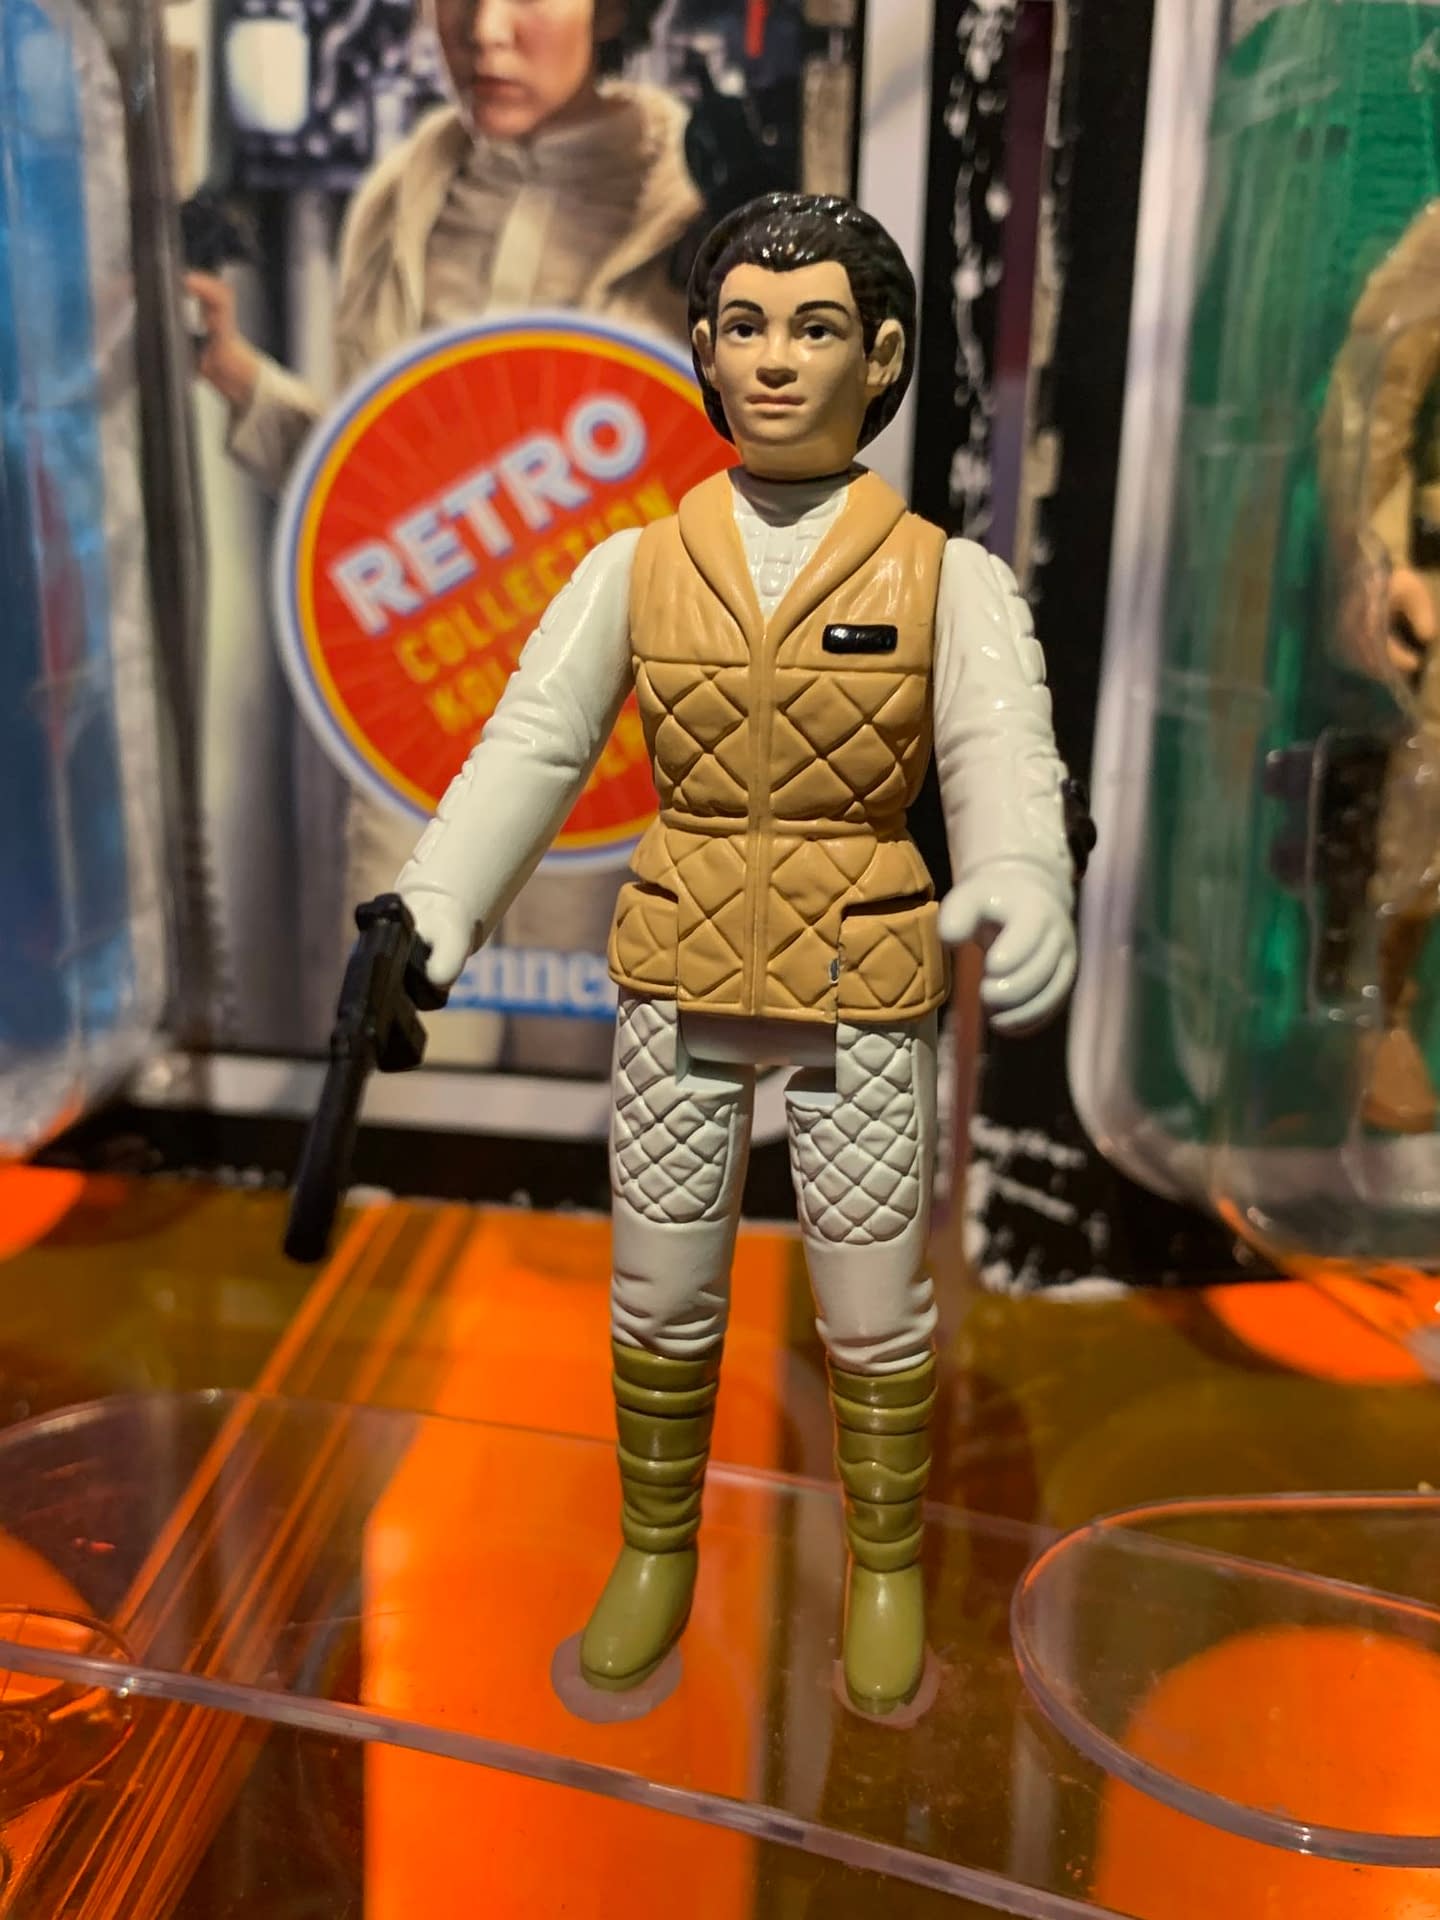 Hasbro New York Toy Fair 2020 - 38 Photos of Star Wars 